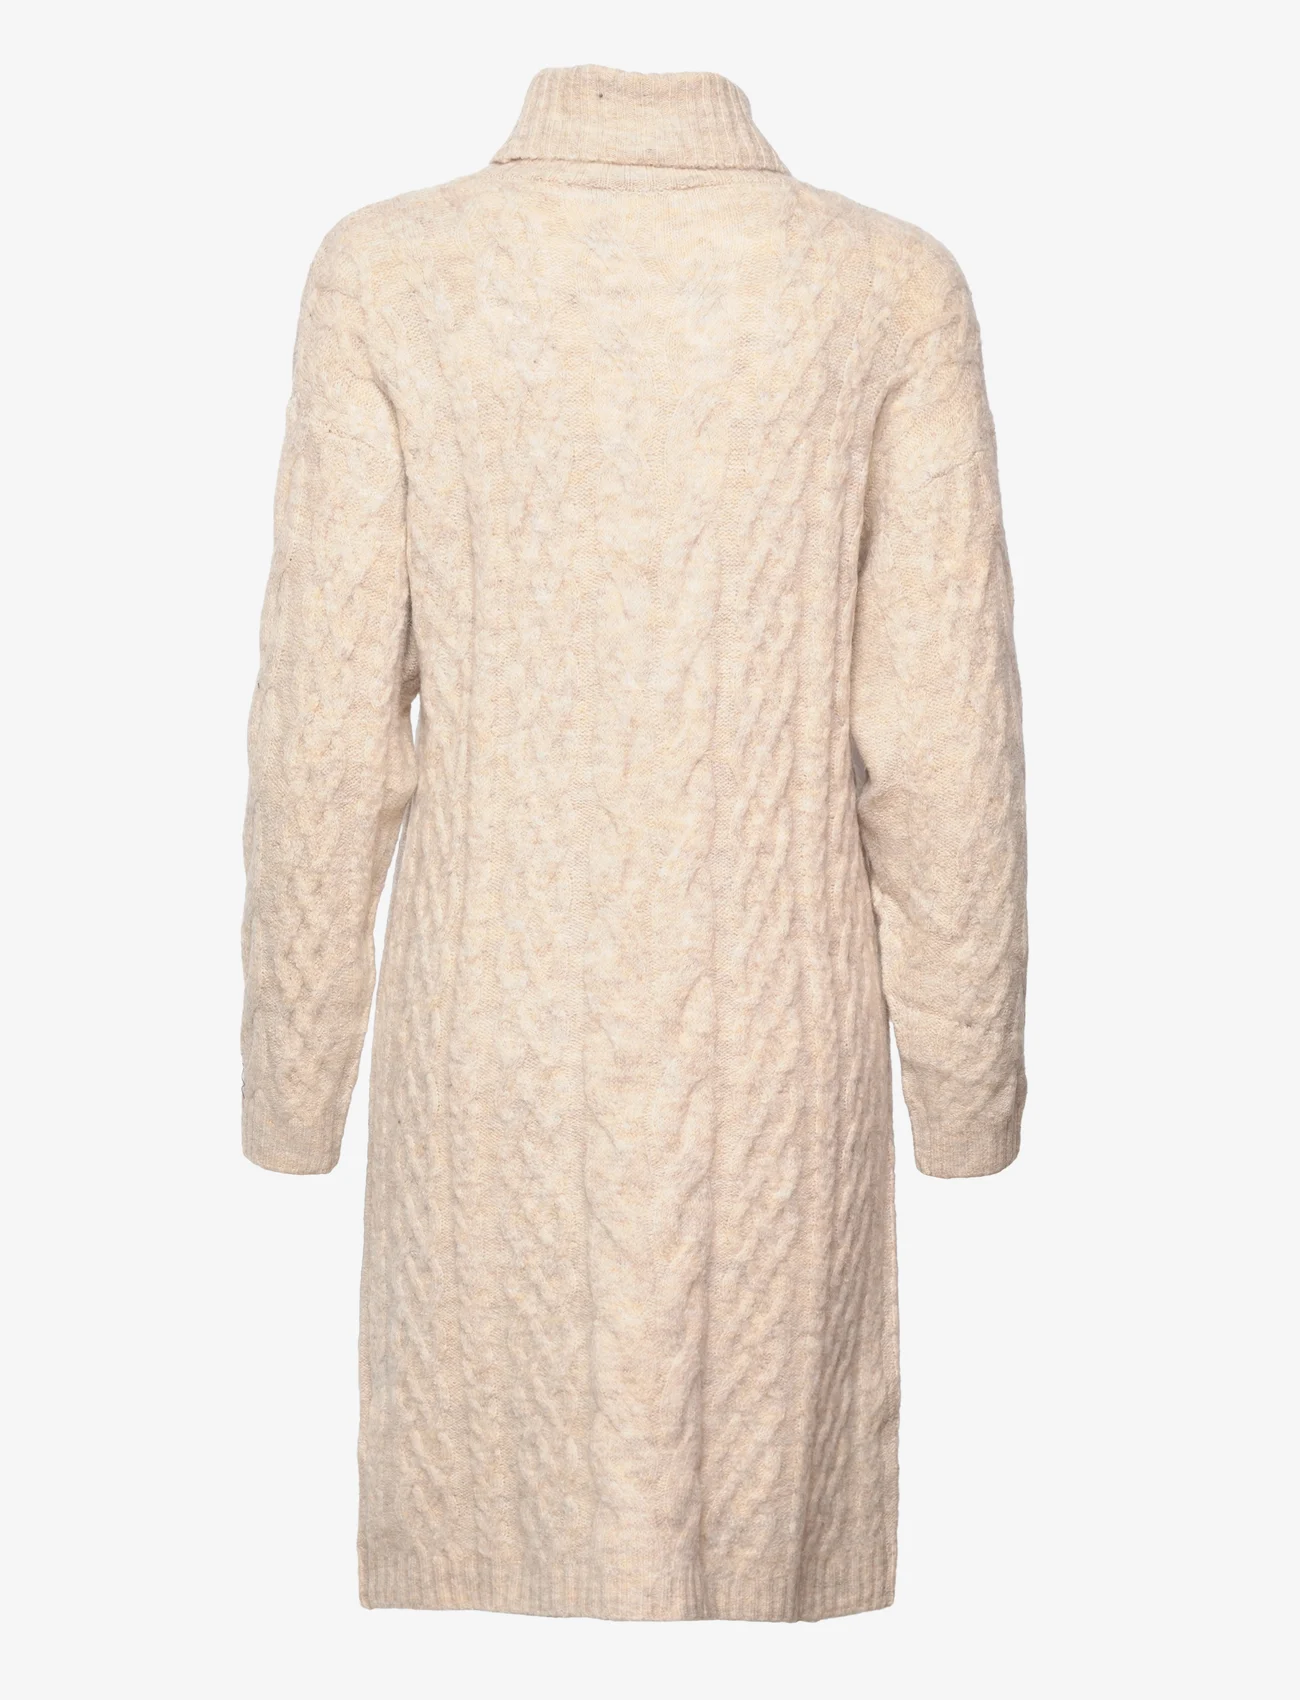 Cream - CRCabin Knit Dress - Mollie Fit - knitted dresses - oat melange - 1